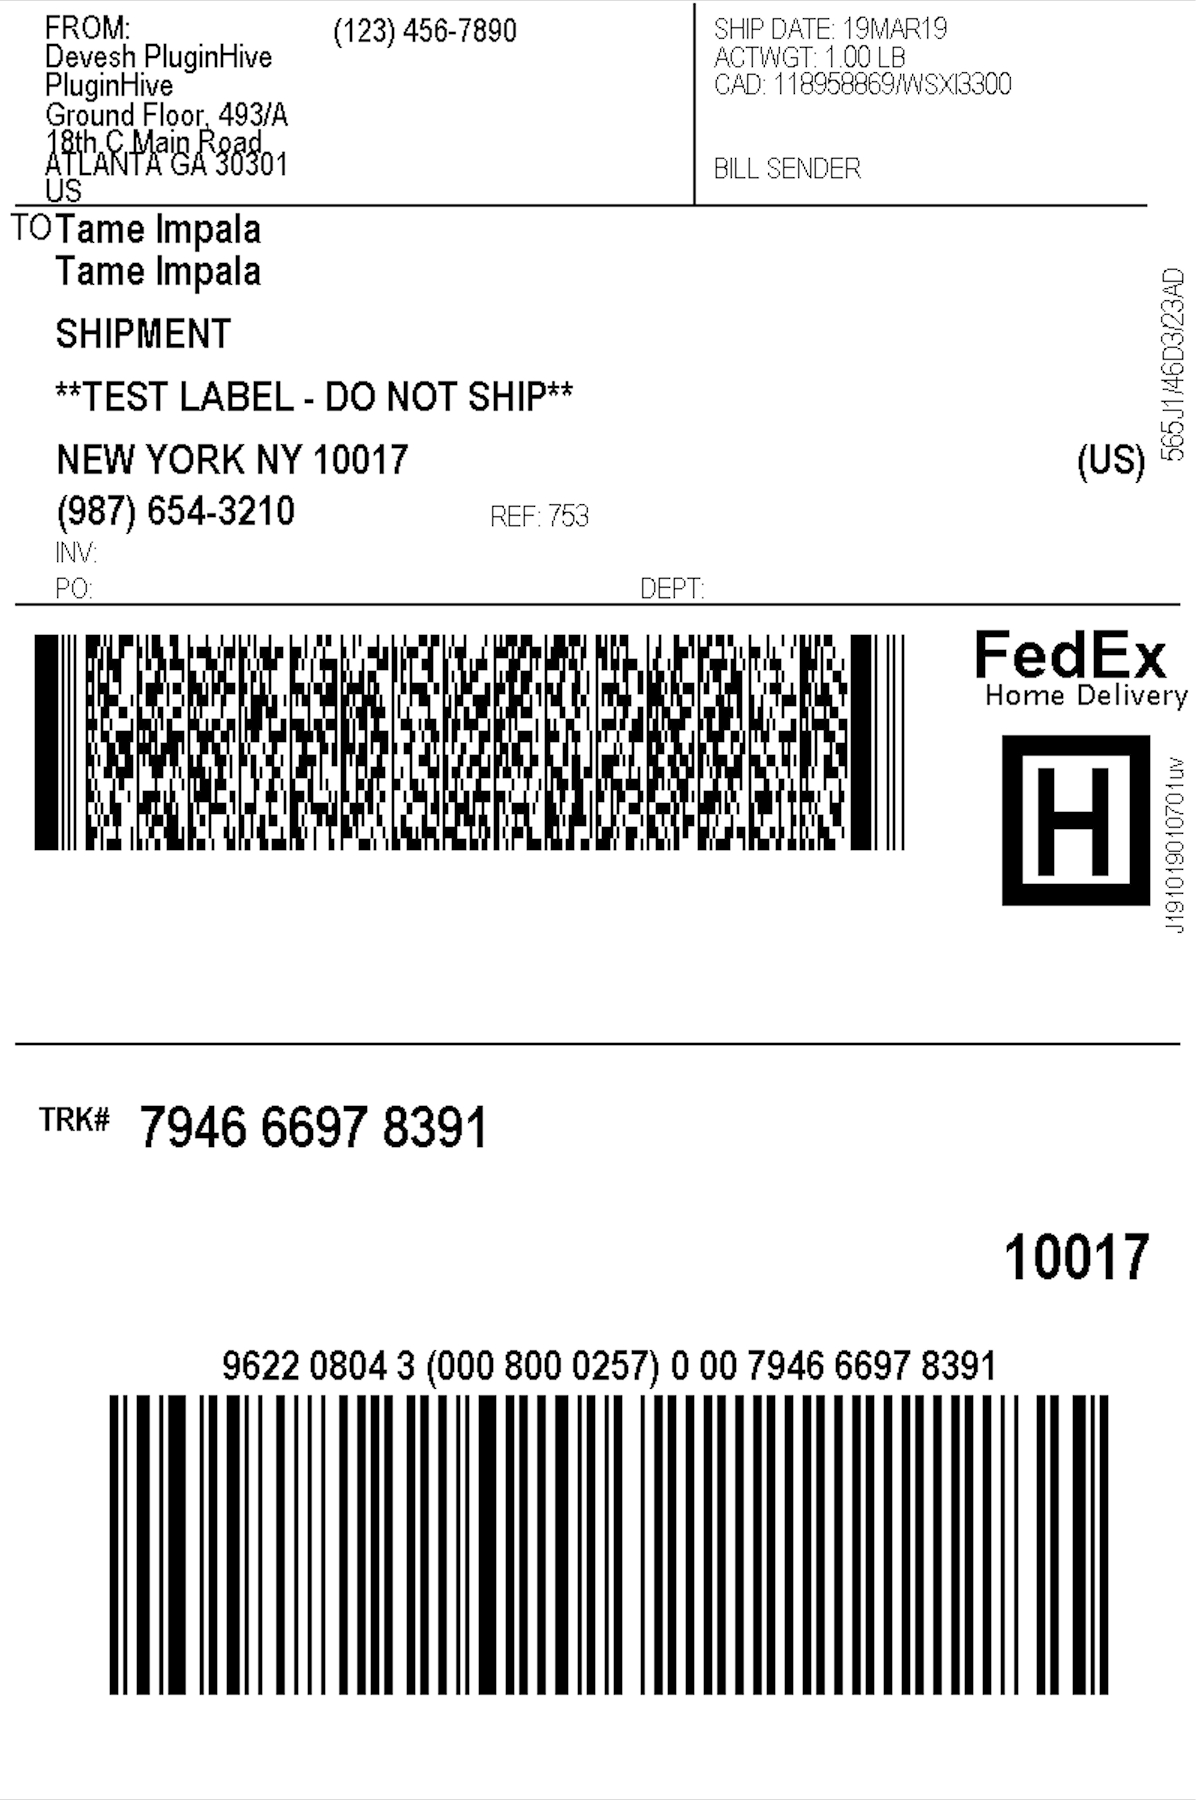 Fedex Ground Return Label With Fedex Label Template Word